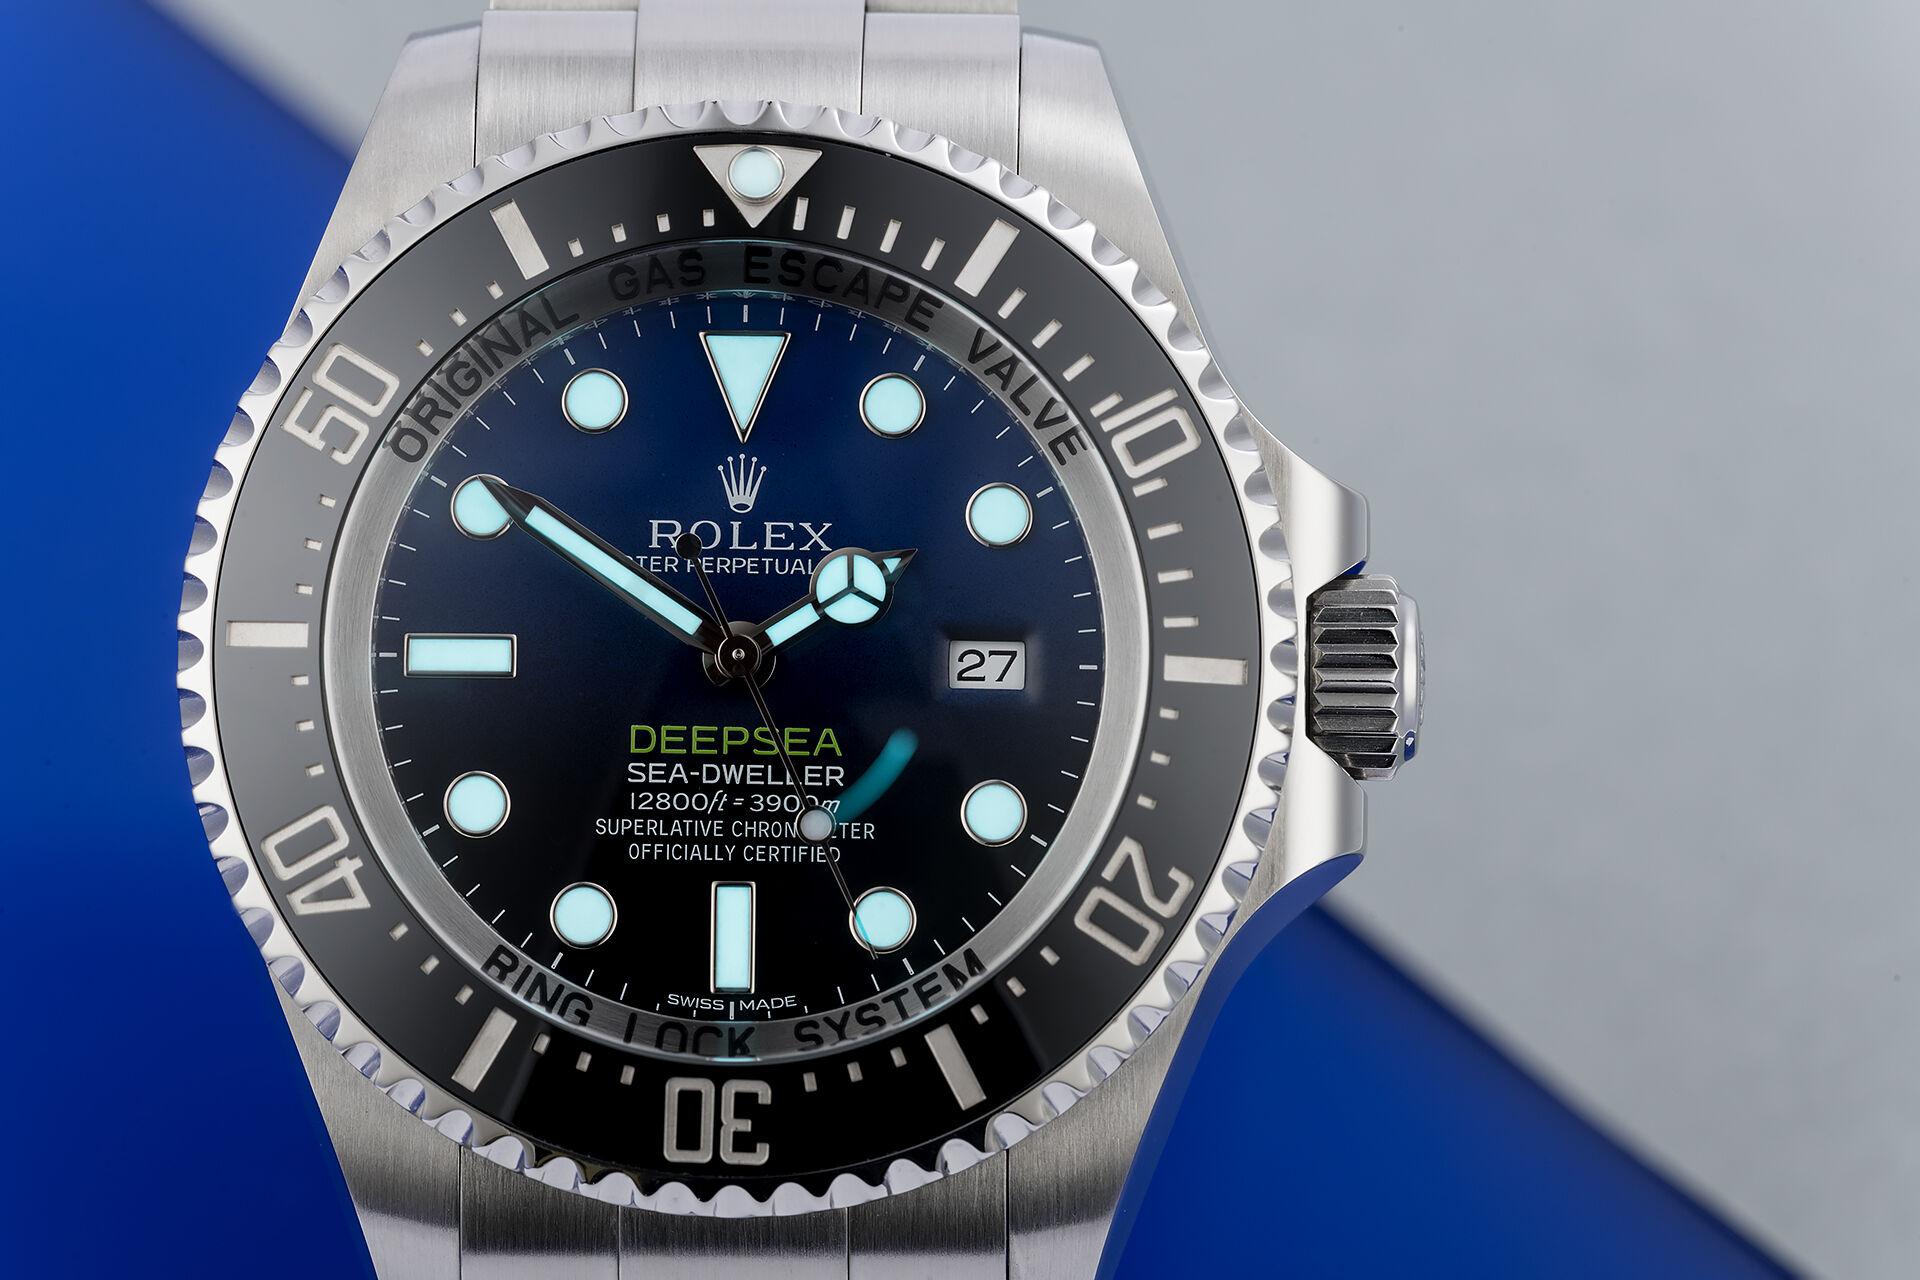 ref 116660 | Under Rolex Warranty - UK Supplied | Rolex Deepsea D-Blue